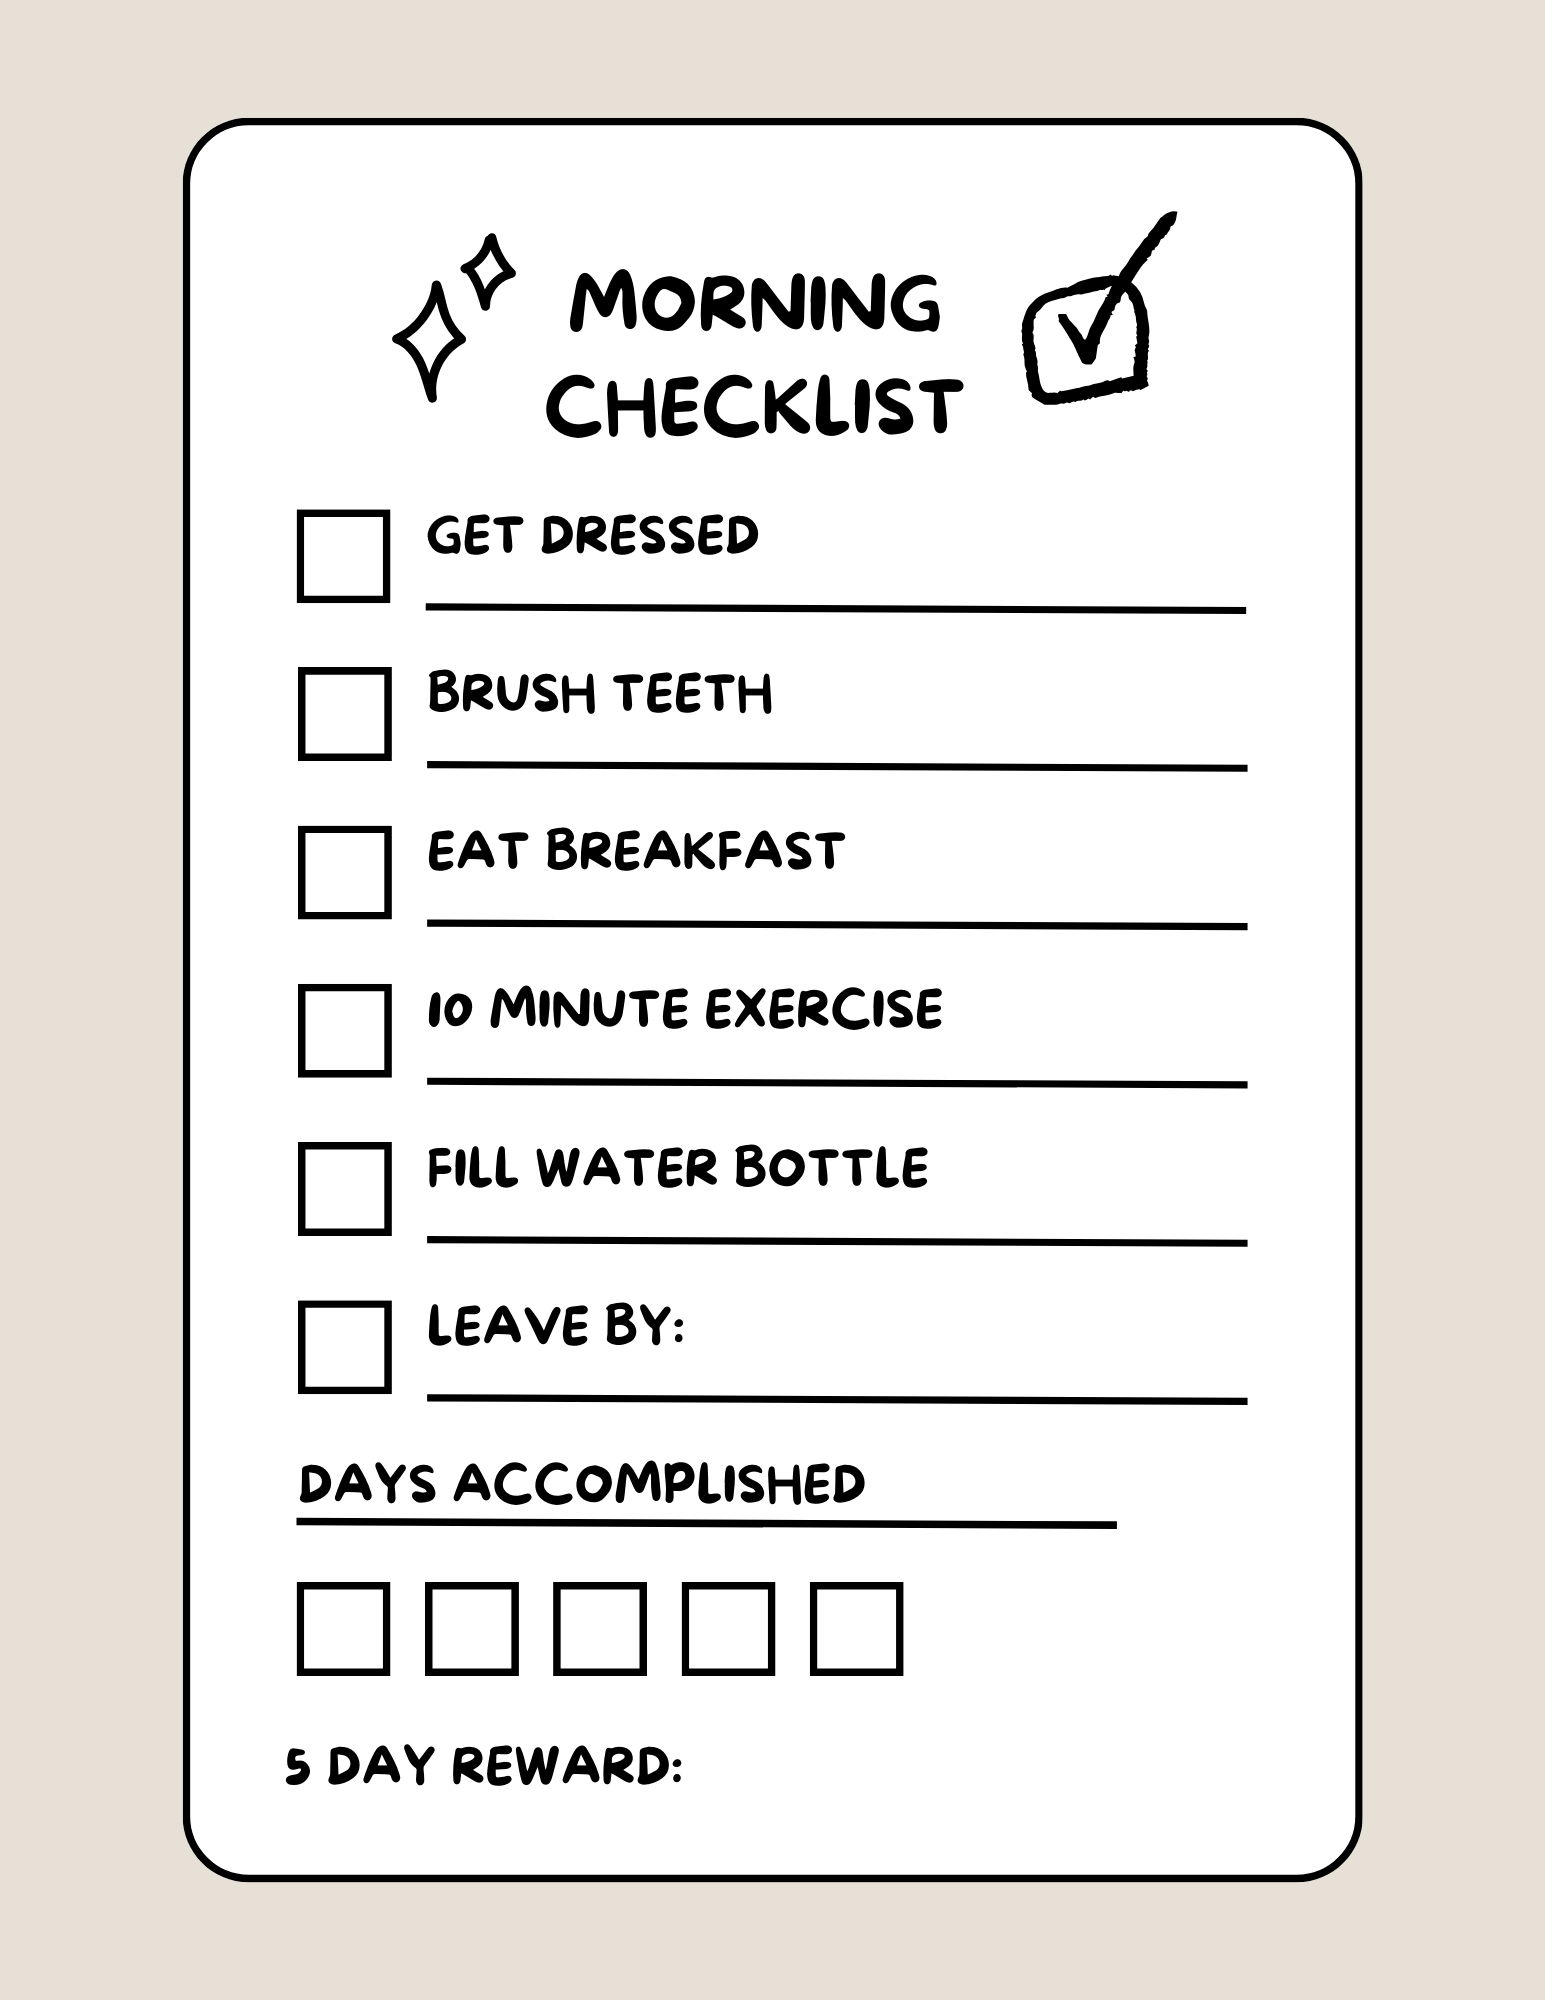 Morning Routine Checklist image